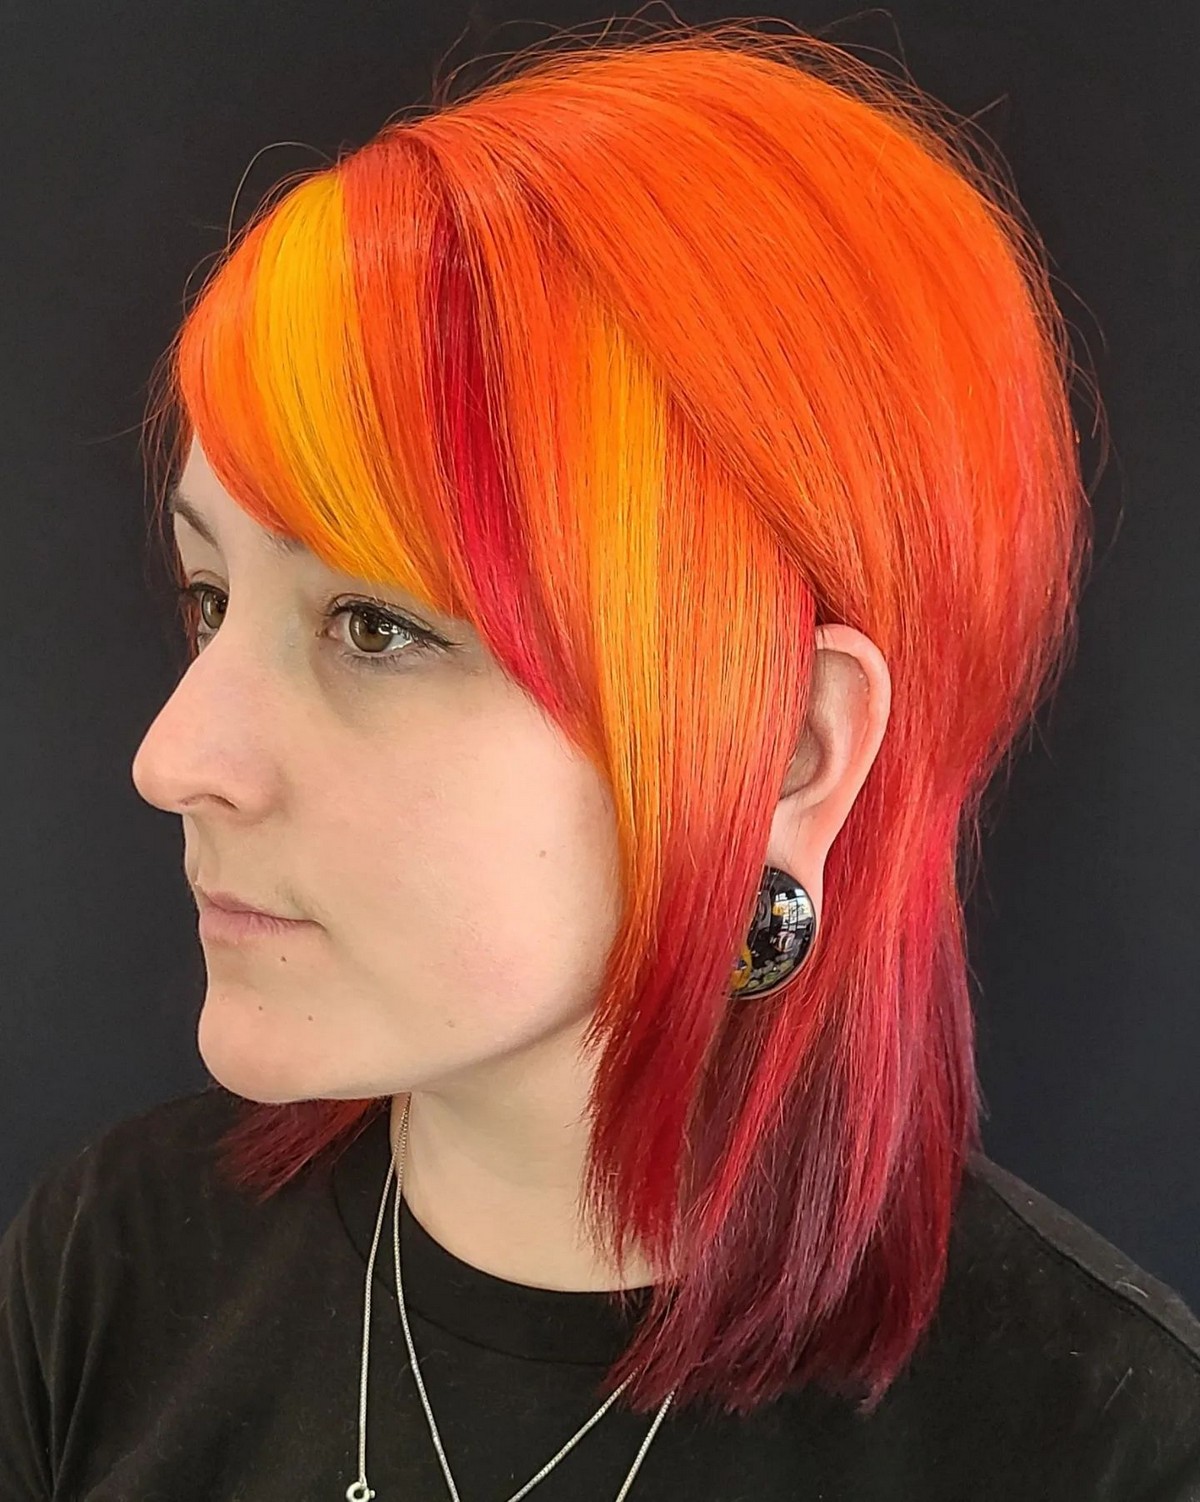 Highlight Orange Hair With Side-Swept Bangs